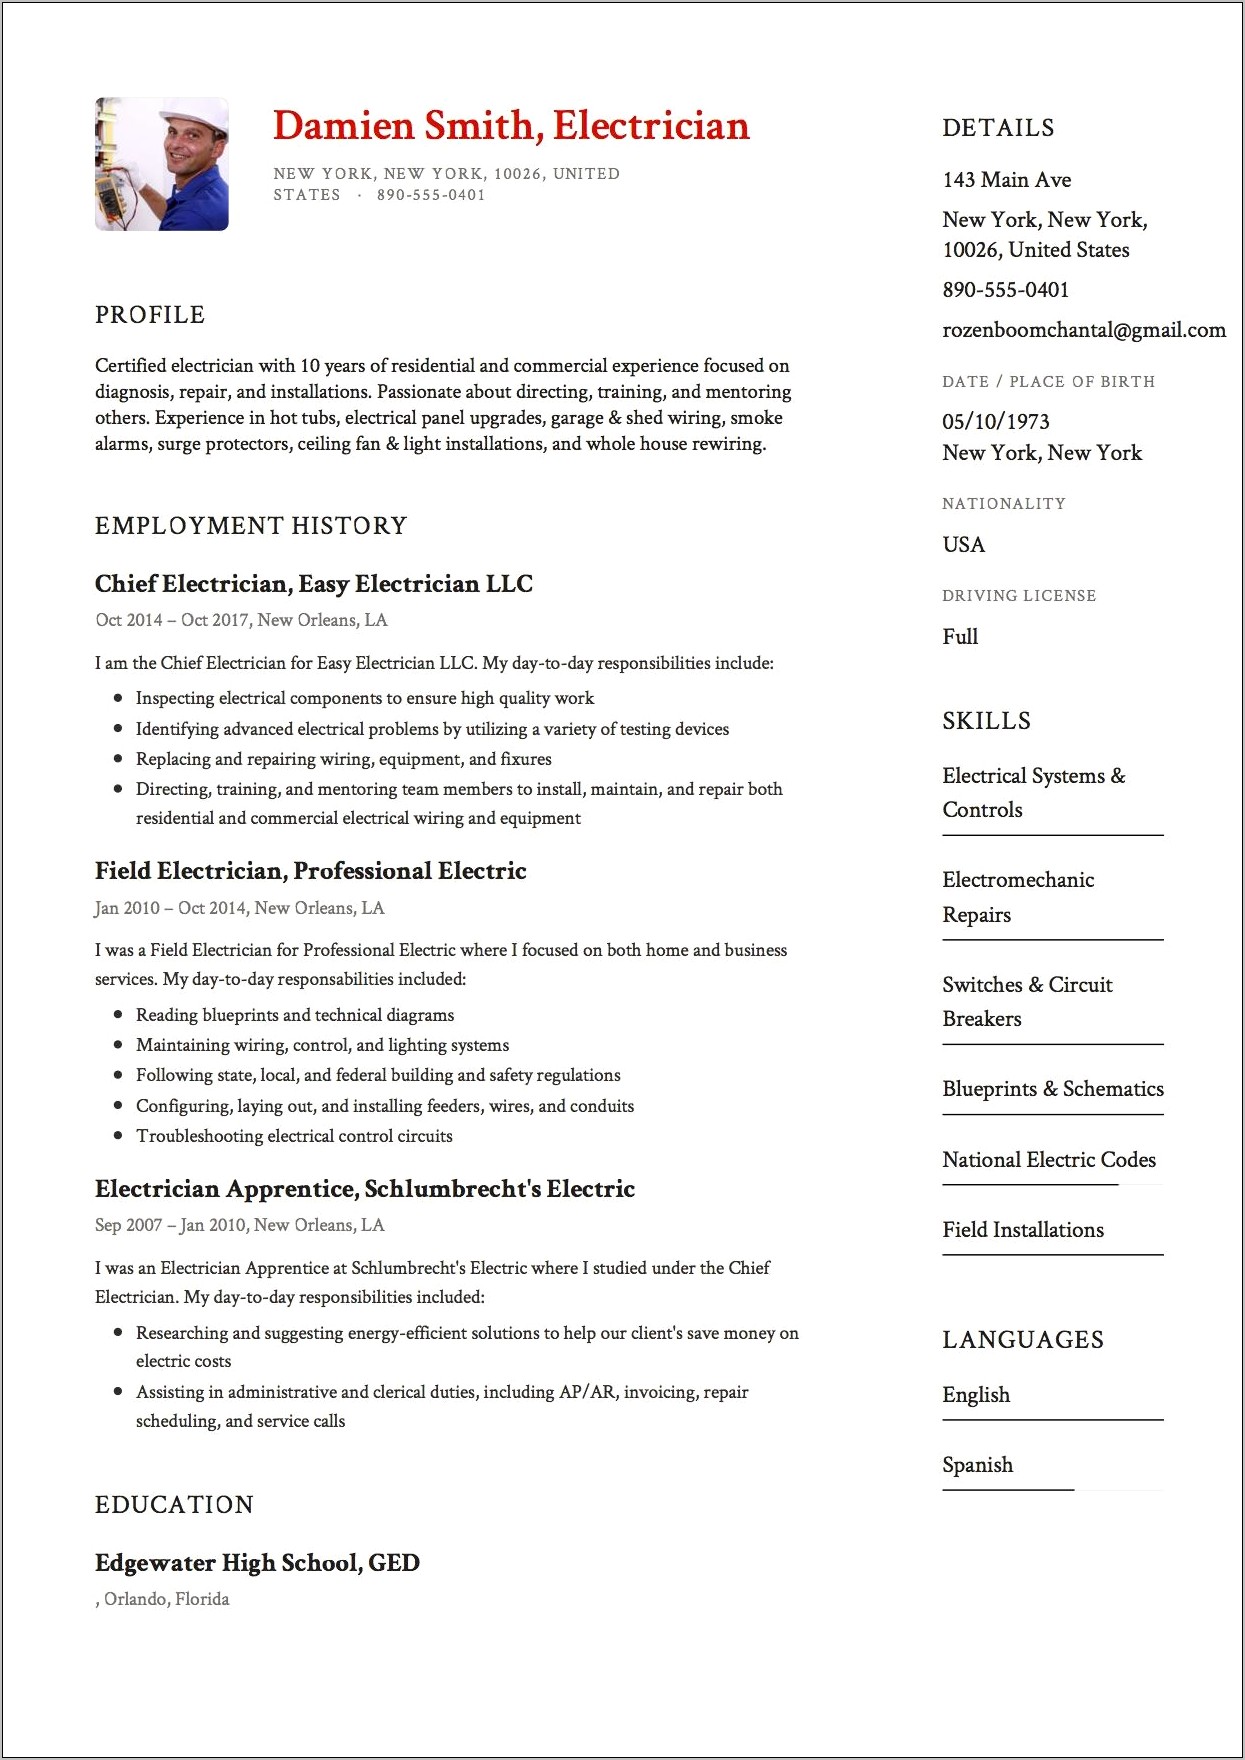 Resume Job Description For Apprentice Electrician